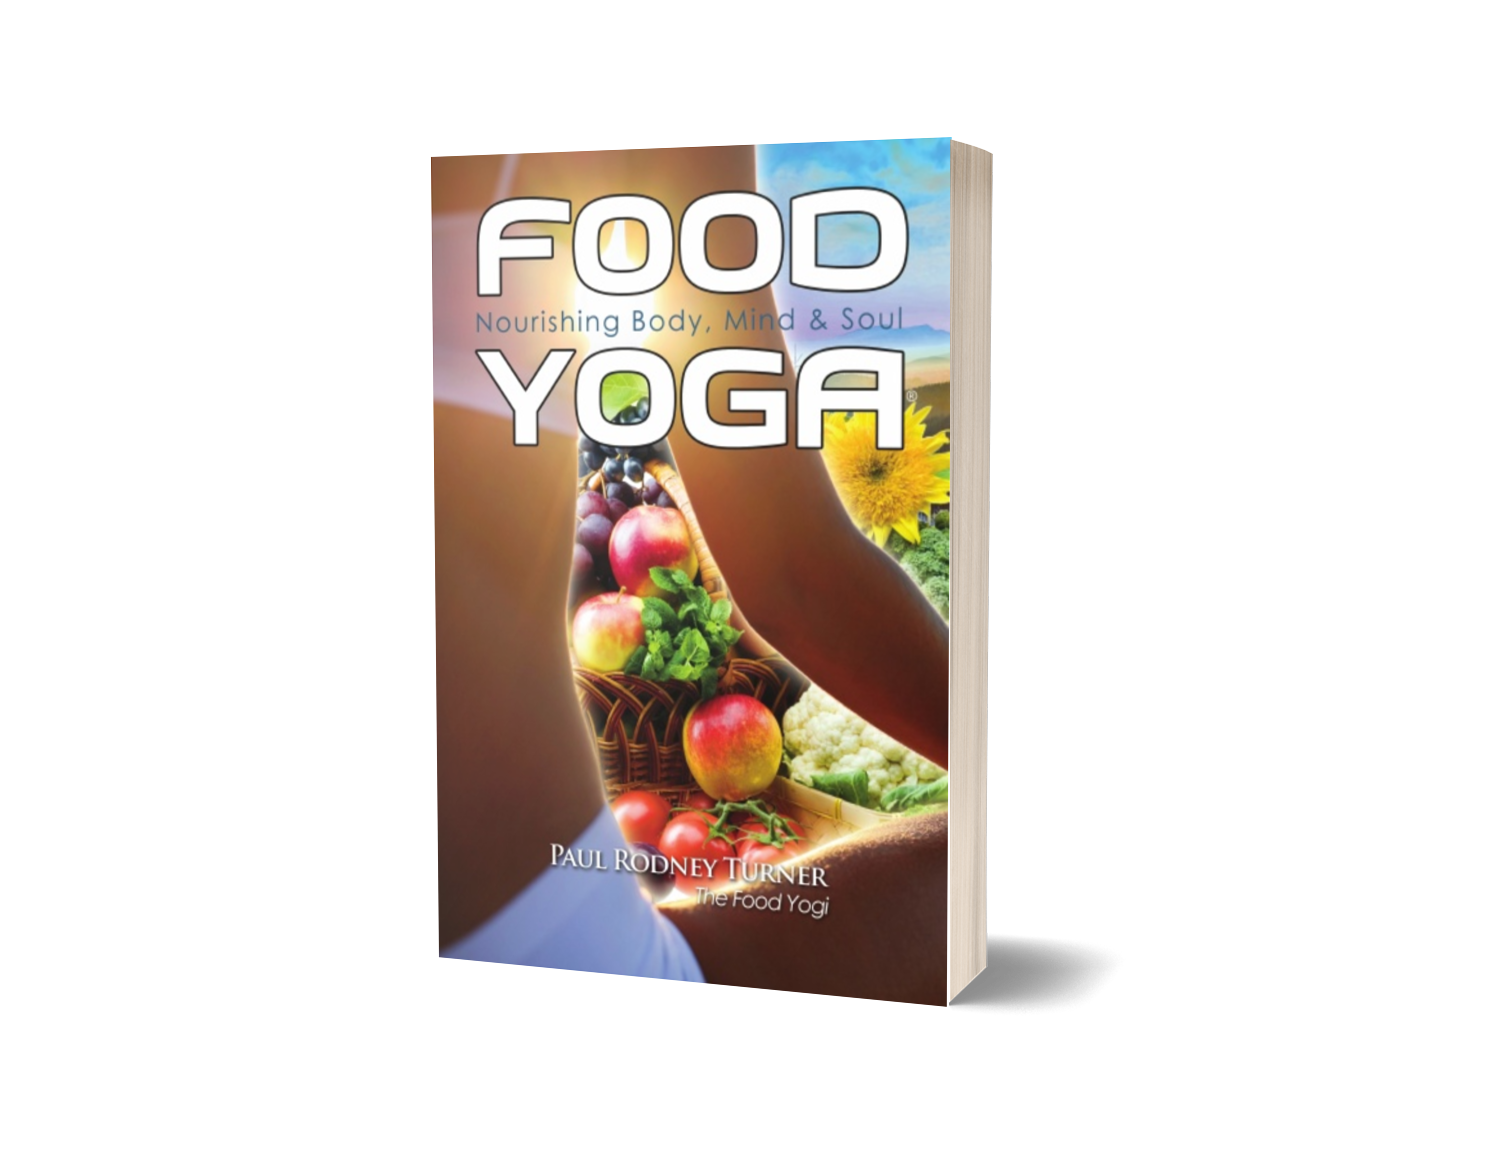 FOOD YOGA - Nourishing Body, Mind & Soul